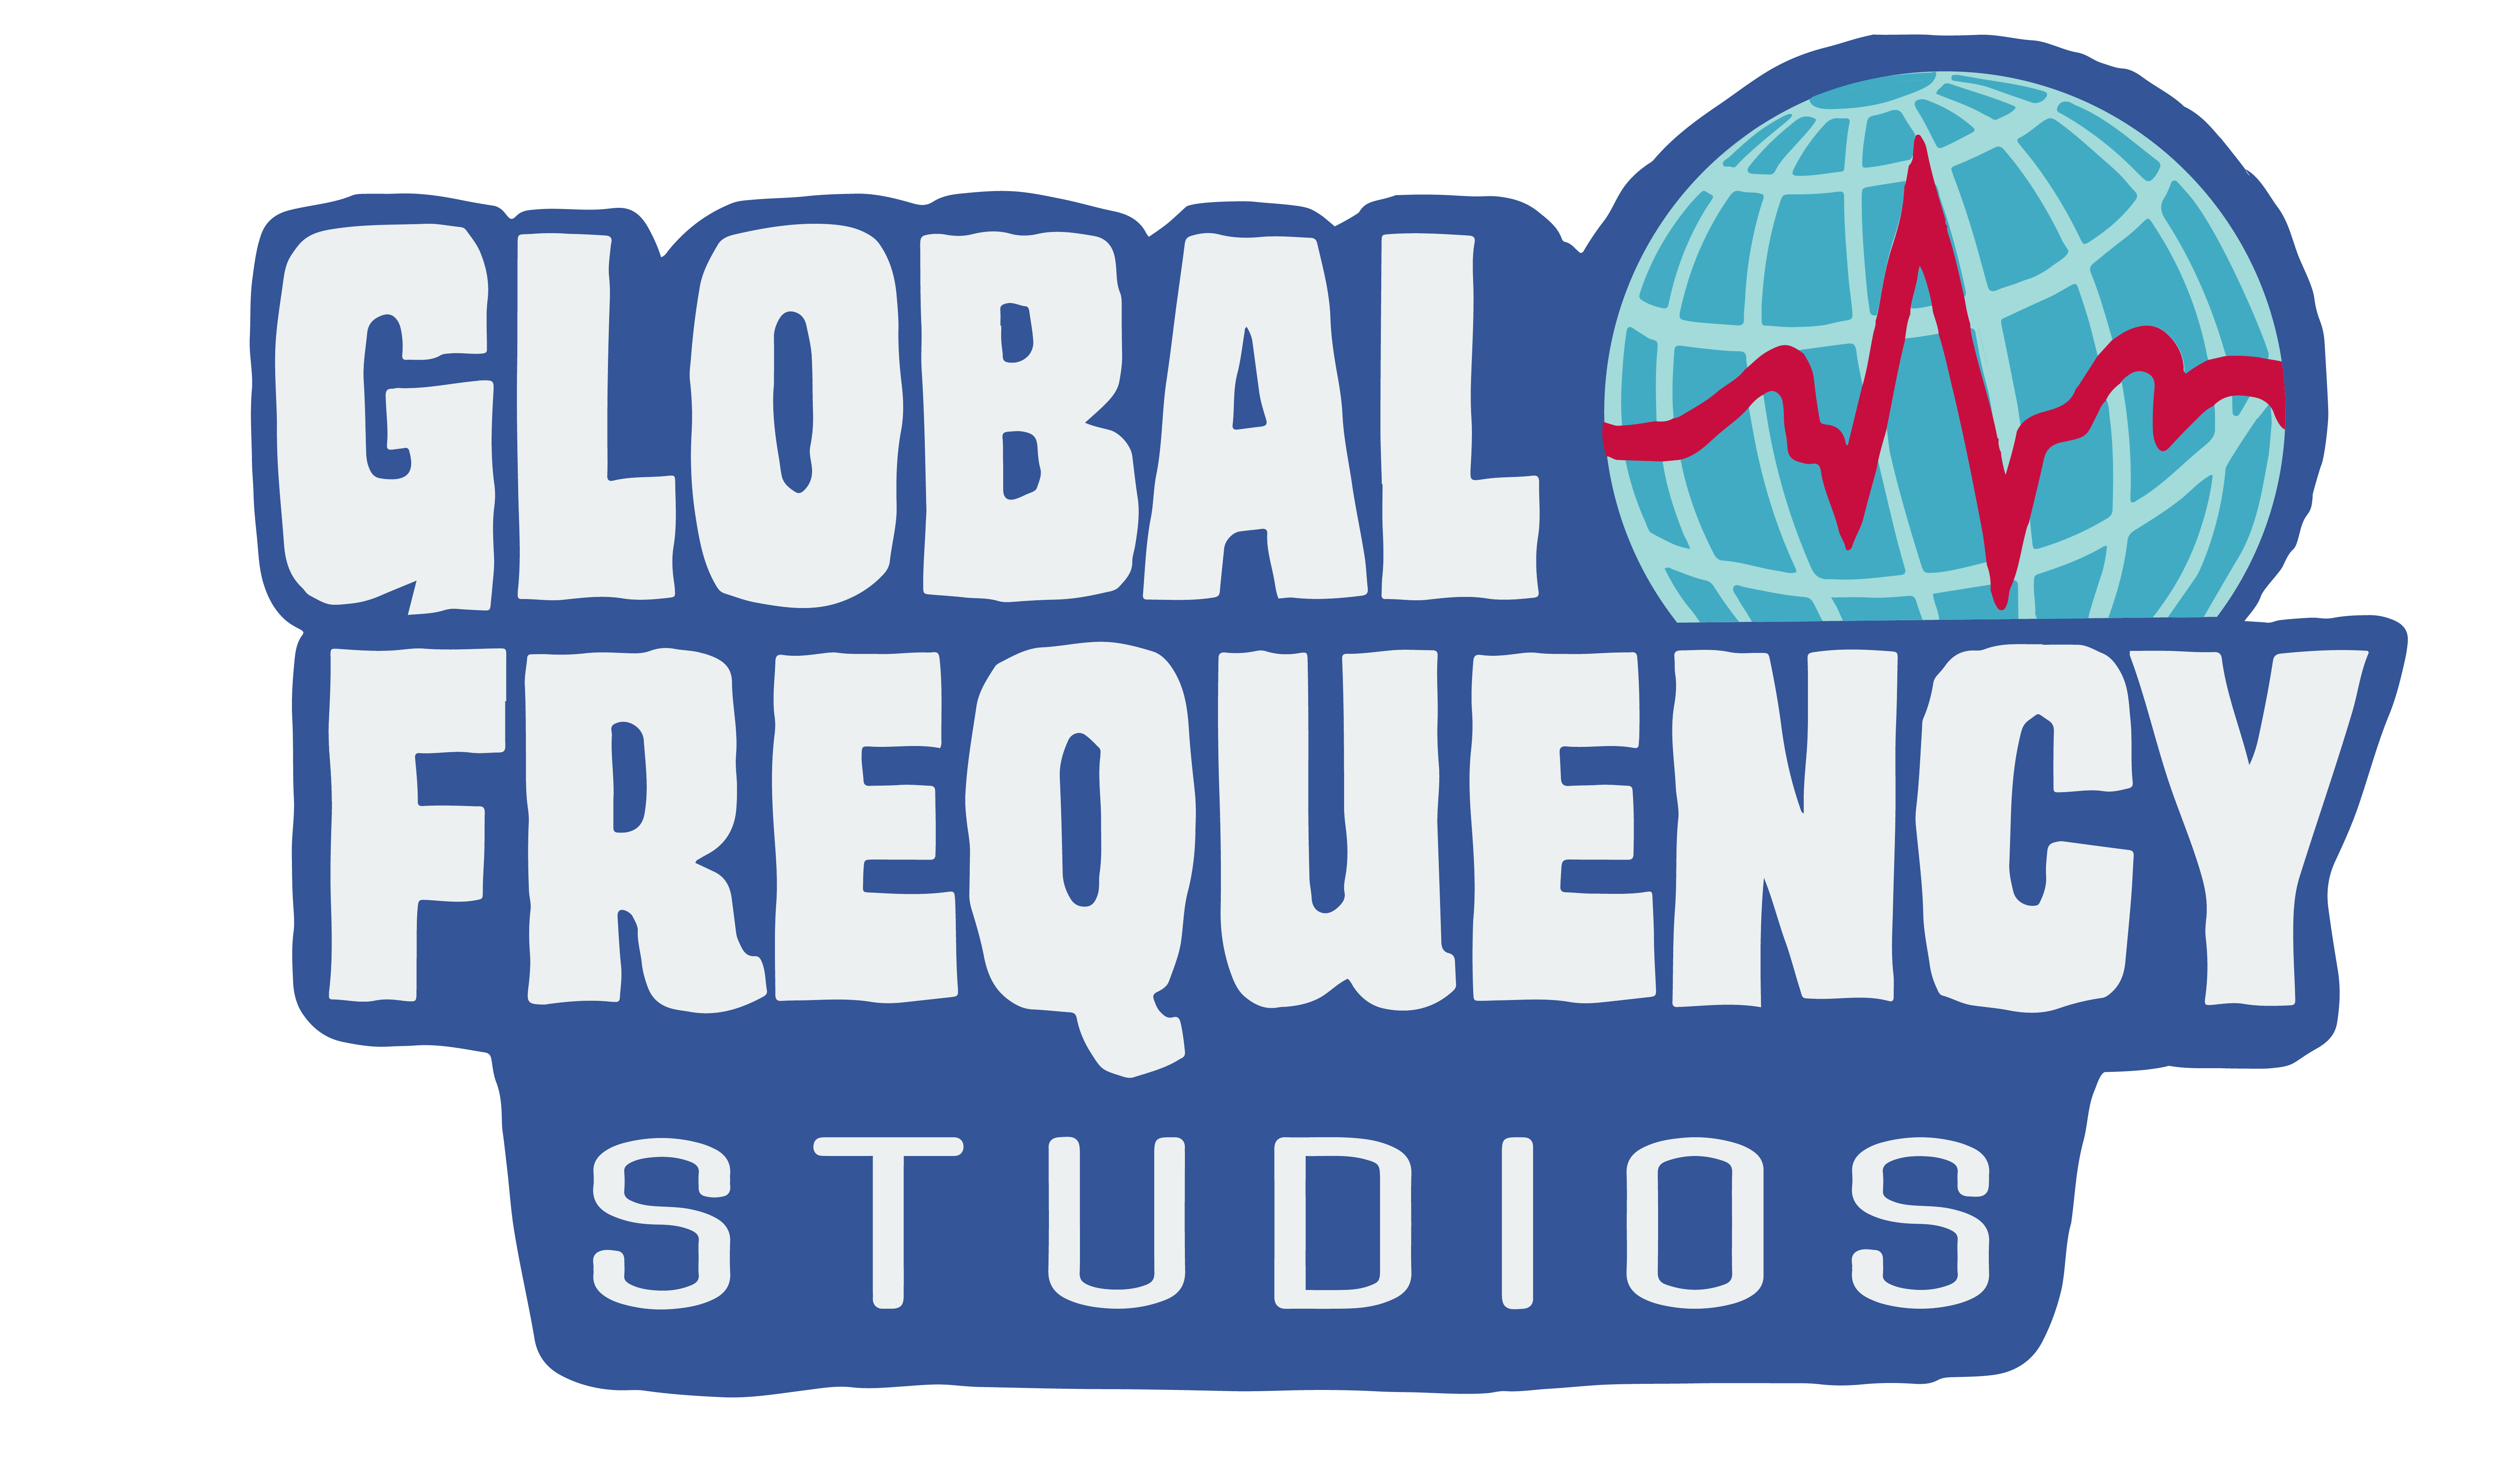 Global Frequency Studios